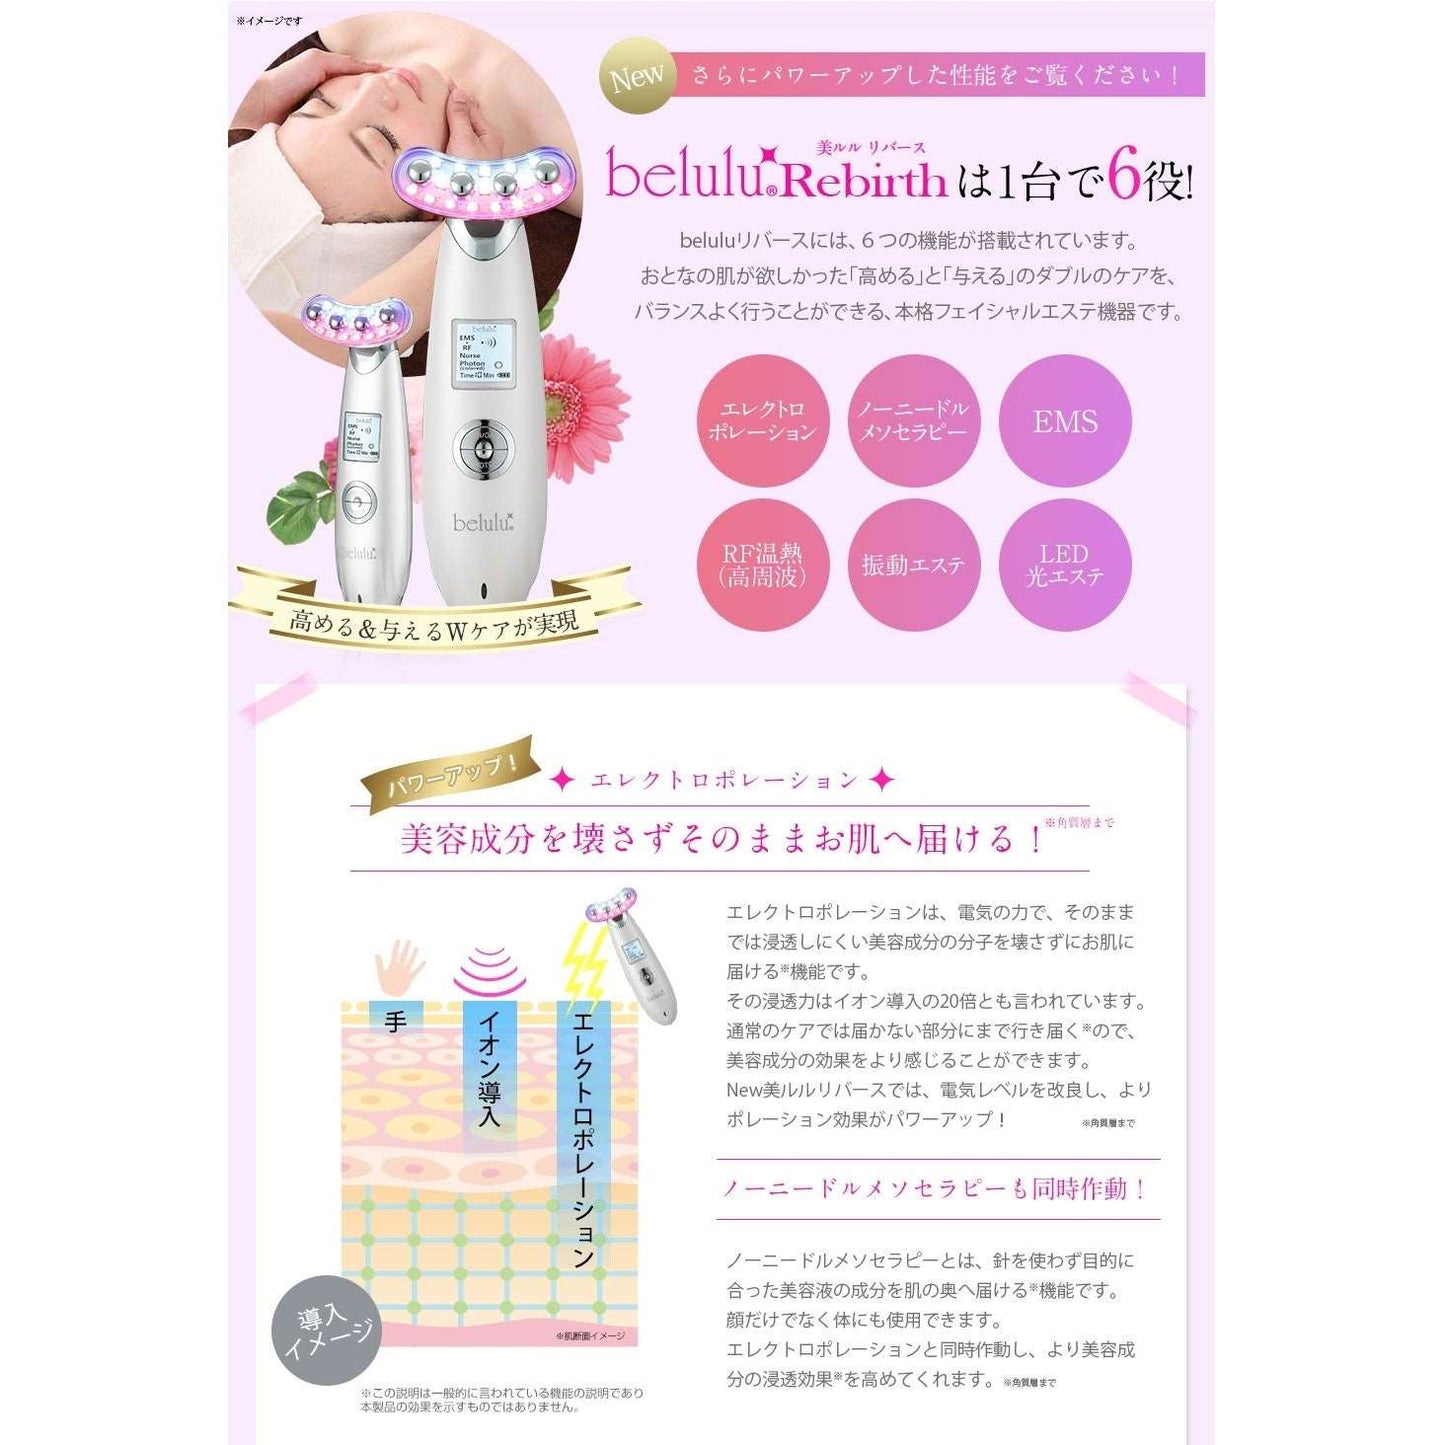 Belulu Rebirth U Shape Beauty Device (Made in Japan)